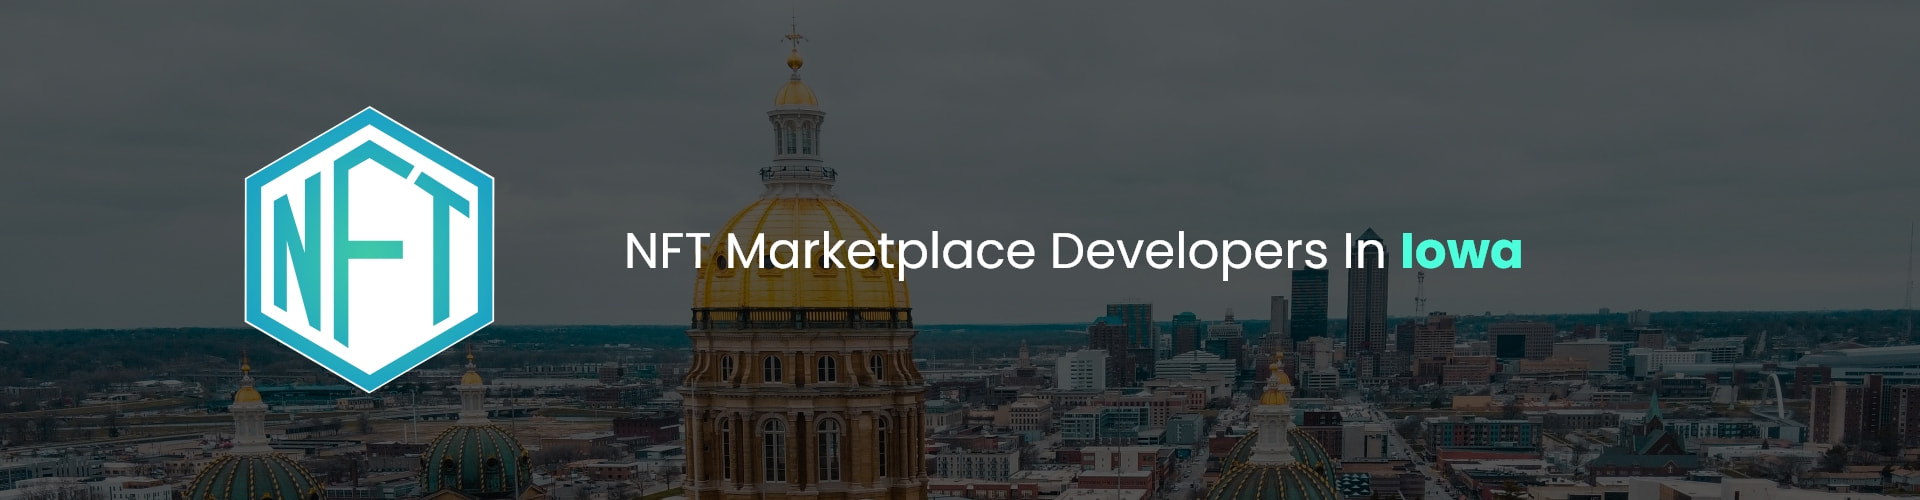 hire nft marketplace developers in iowa